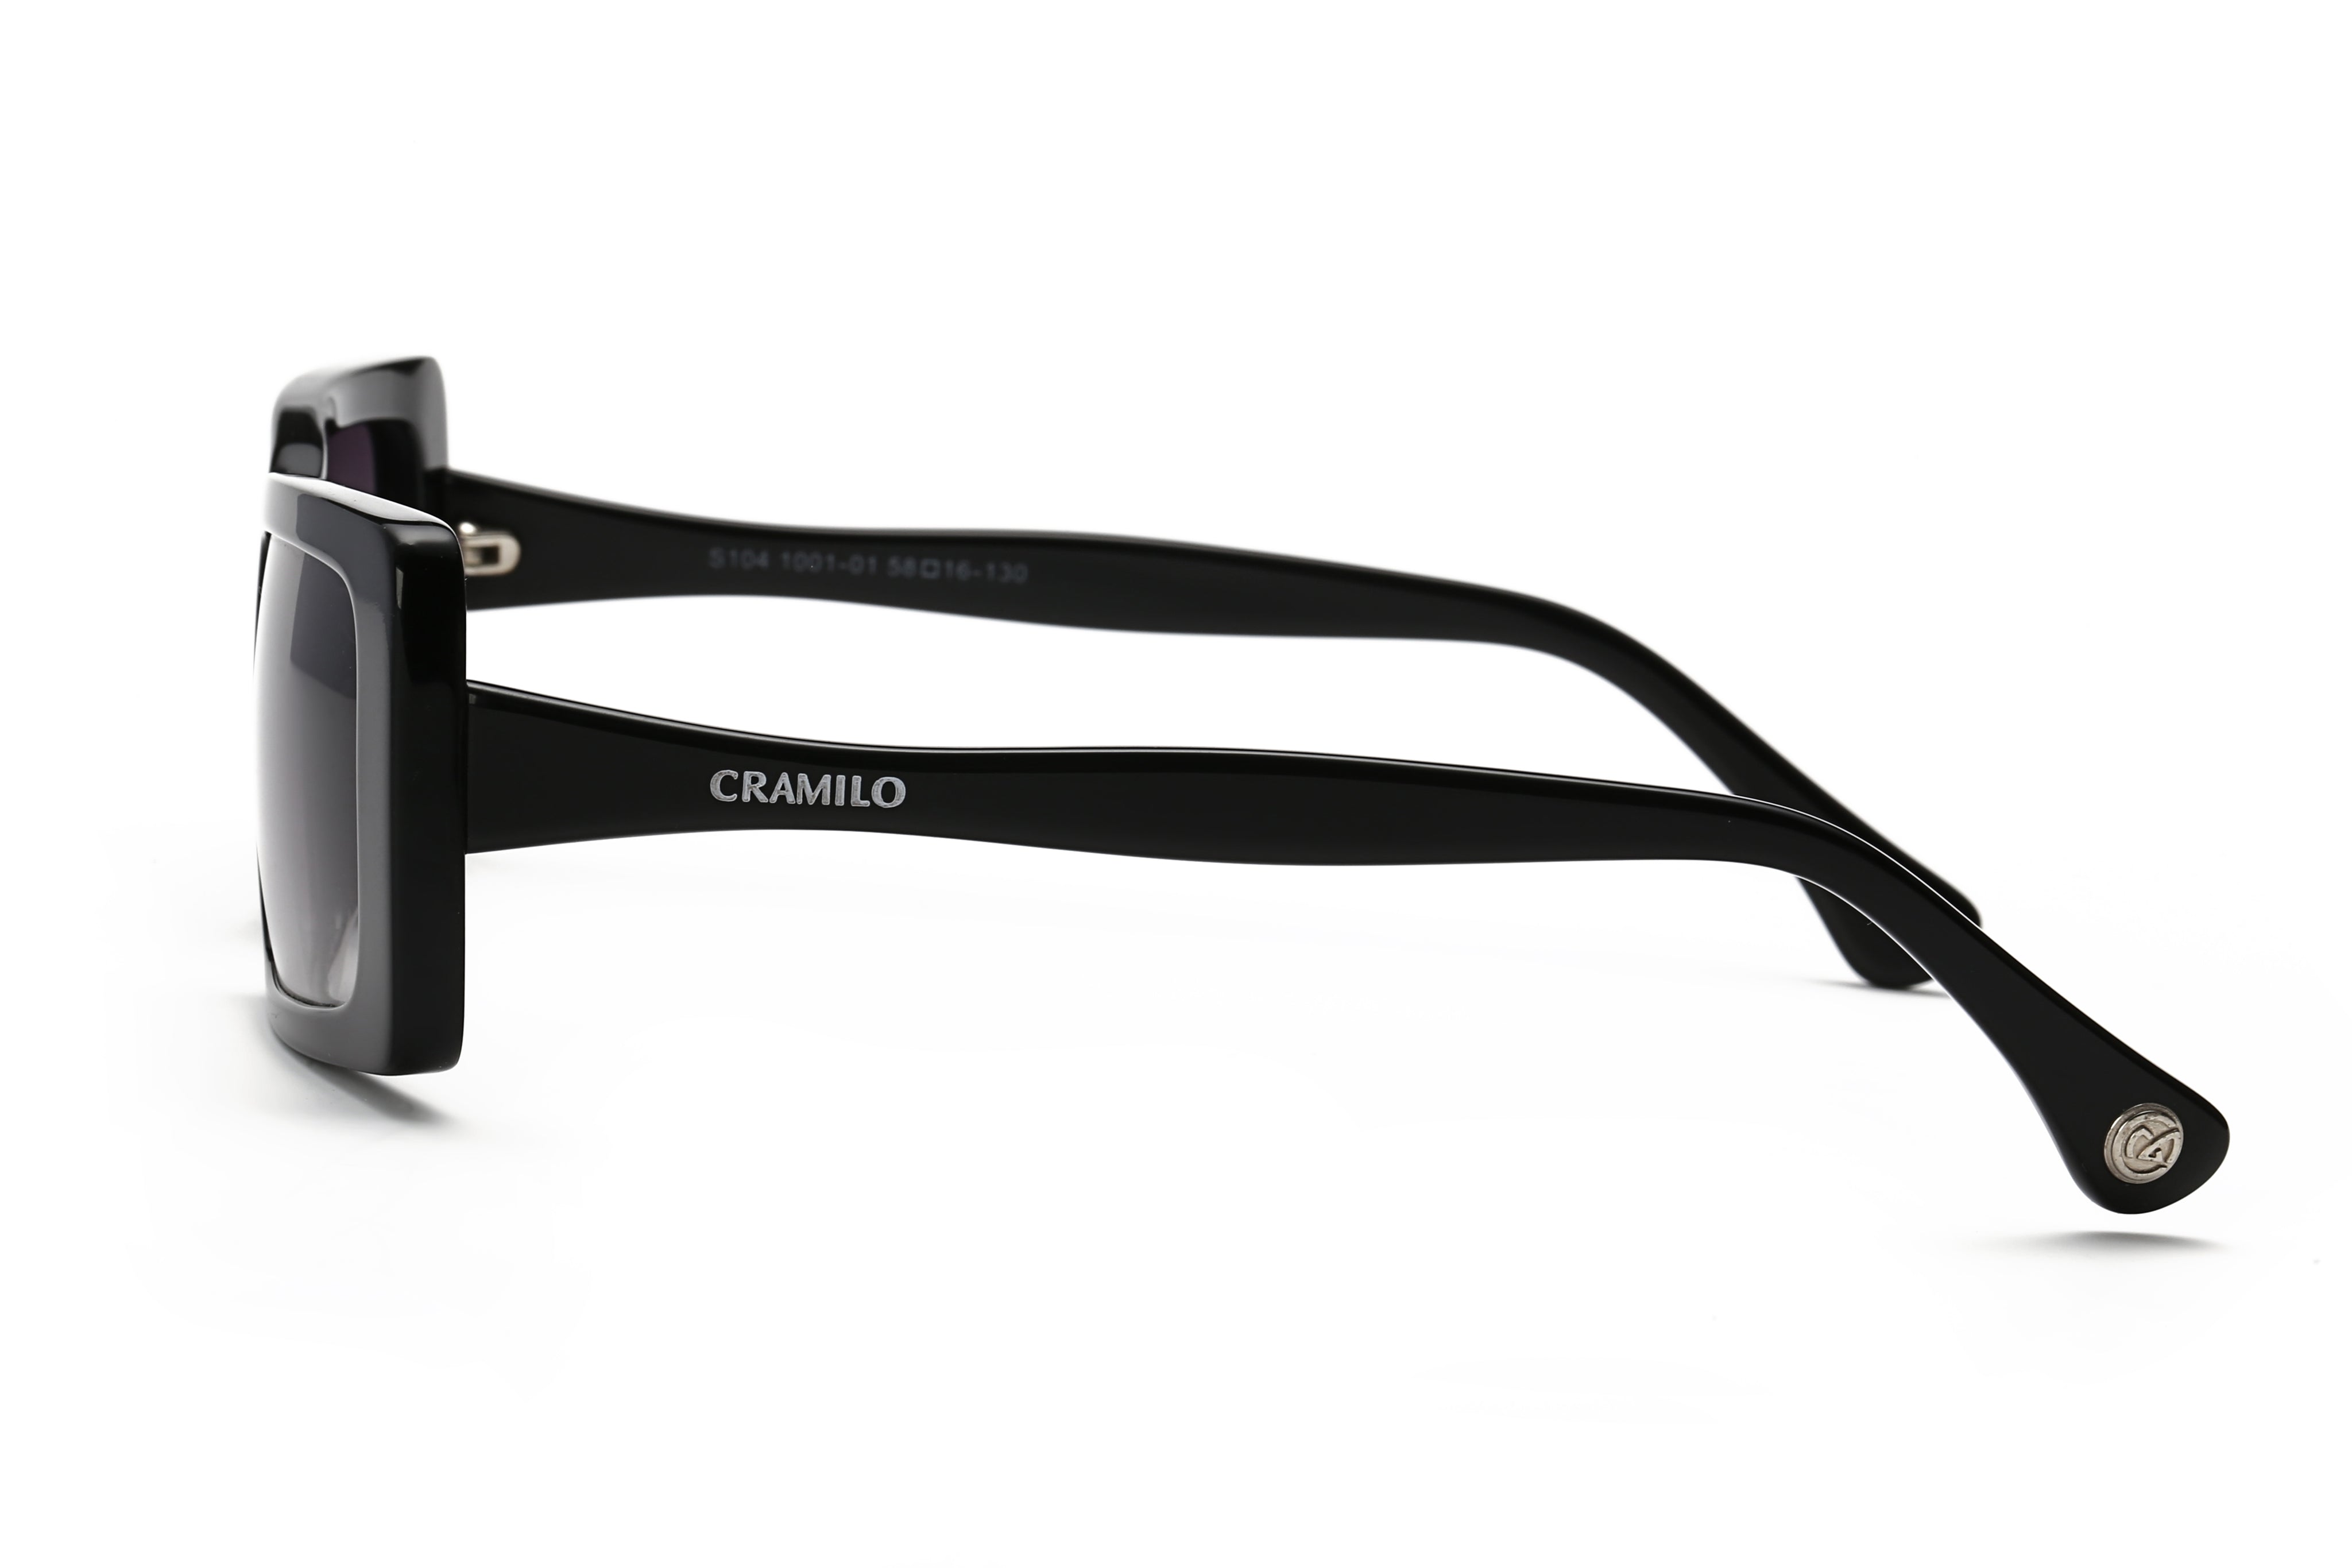 Chanel 5435 C622/S6 Sunglasses